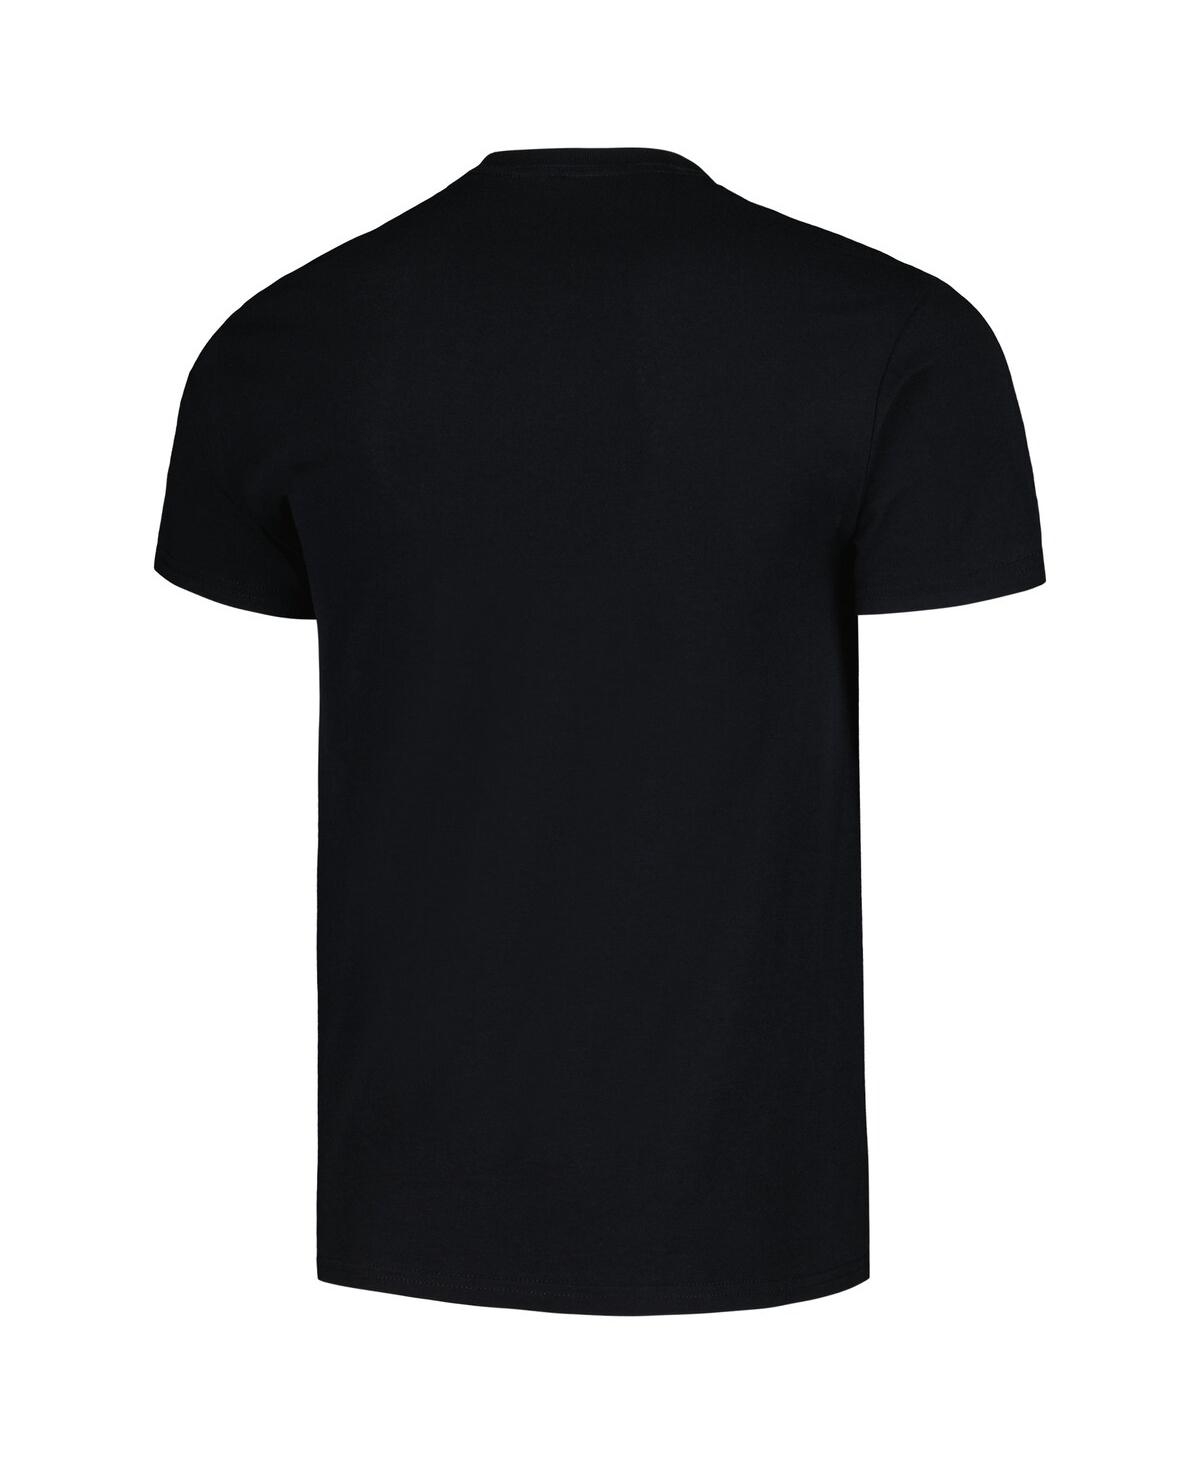 Shop Manhead Merch Men's  Black Hole Celebrity Skin Graphic T-shirt